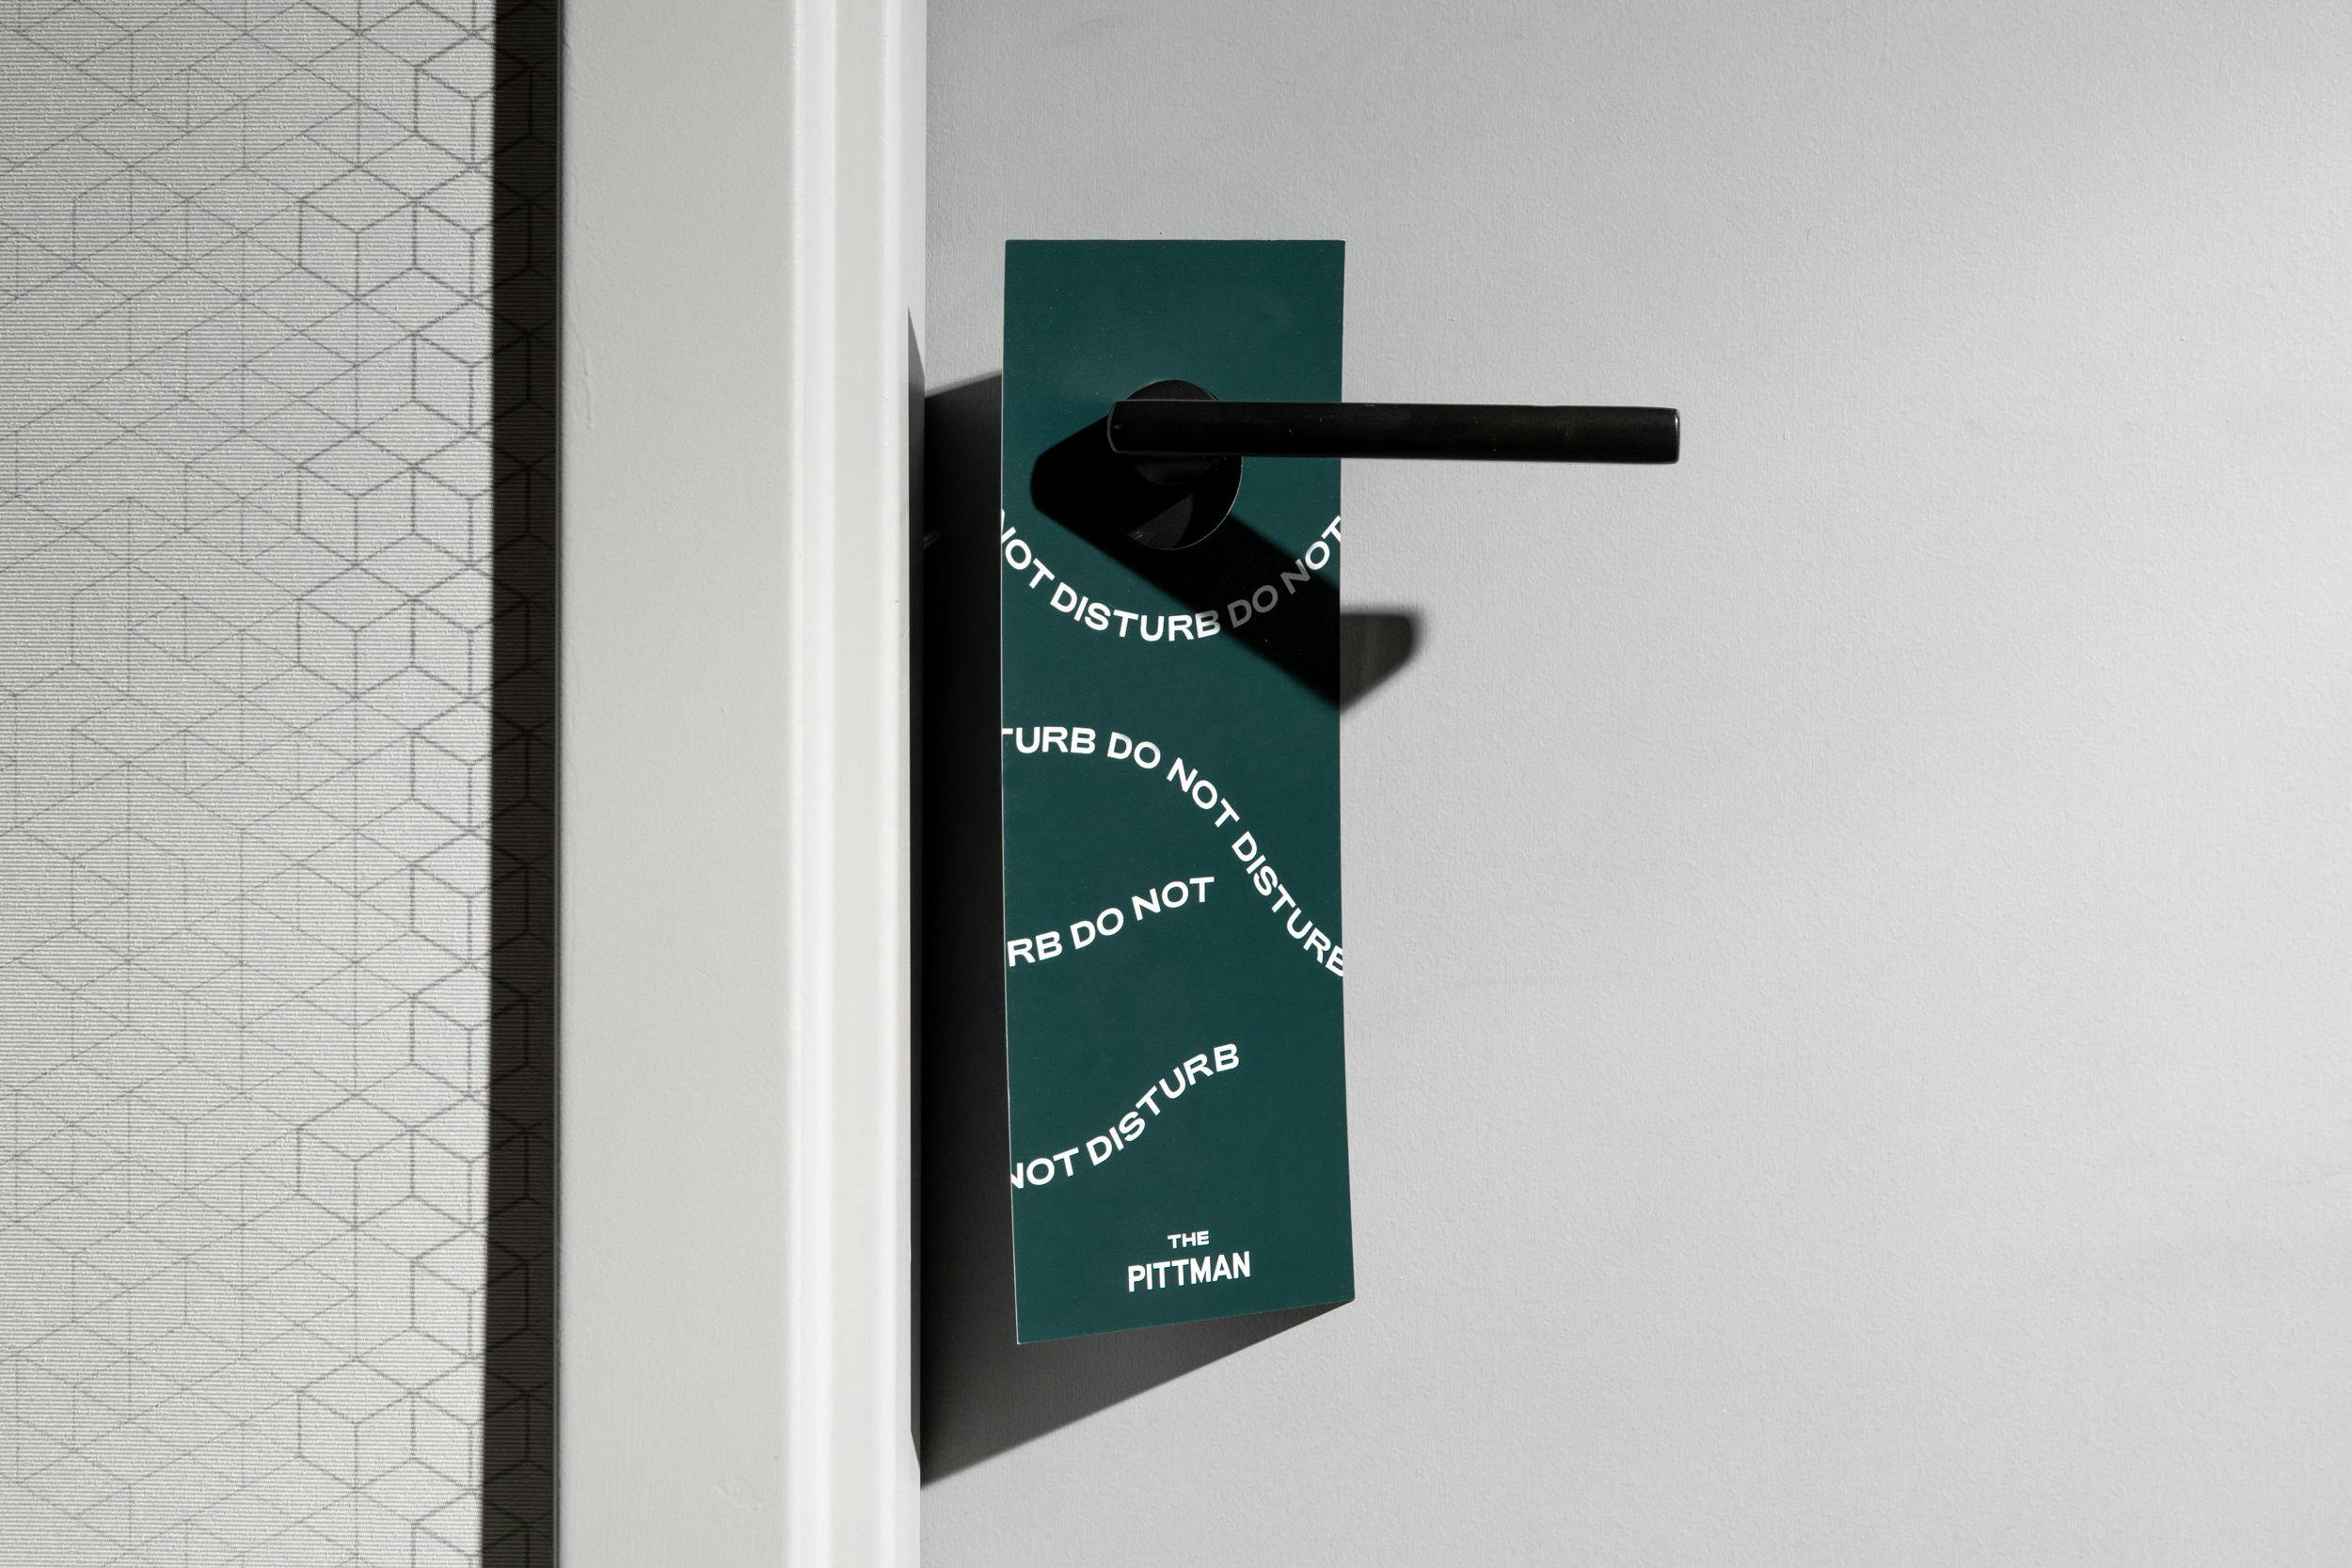 Do not disturb sign on the door-handle of a Pittman Hotel room